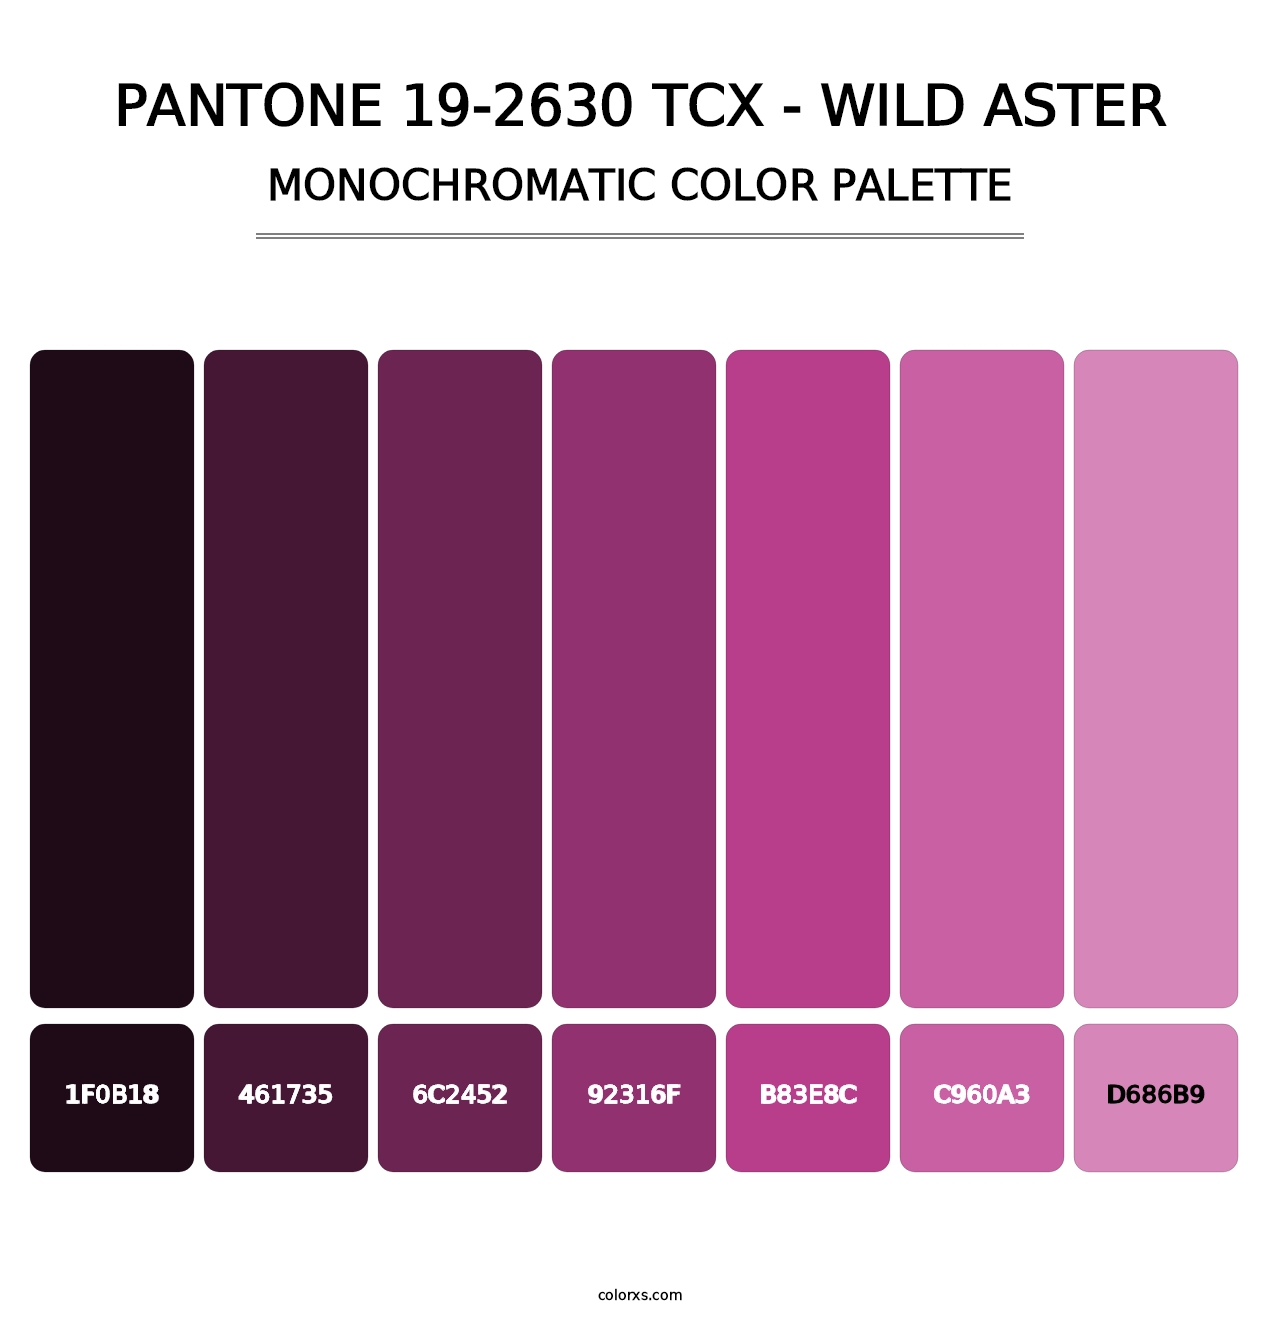 PANTONE 19-2630 TCX - Wild Aster - Monochromatic Color Palette